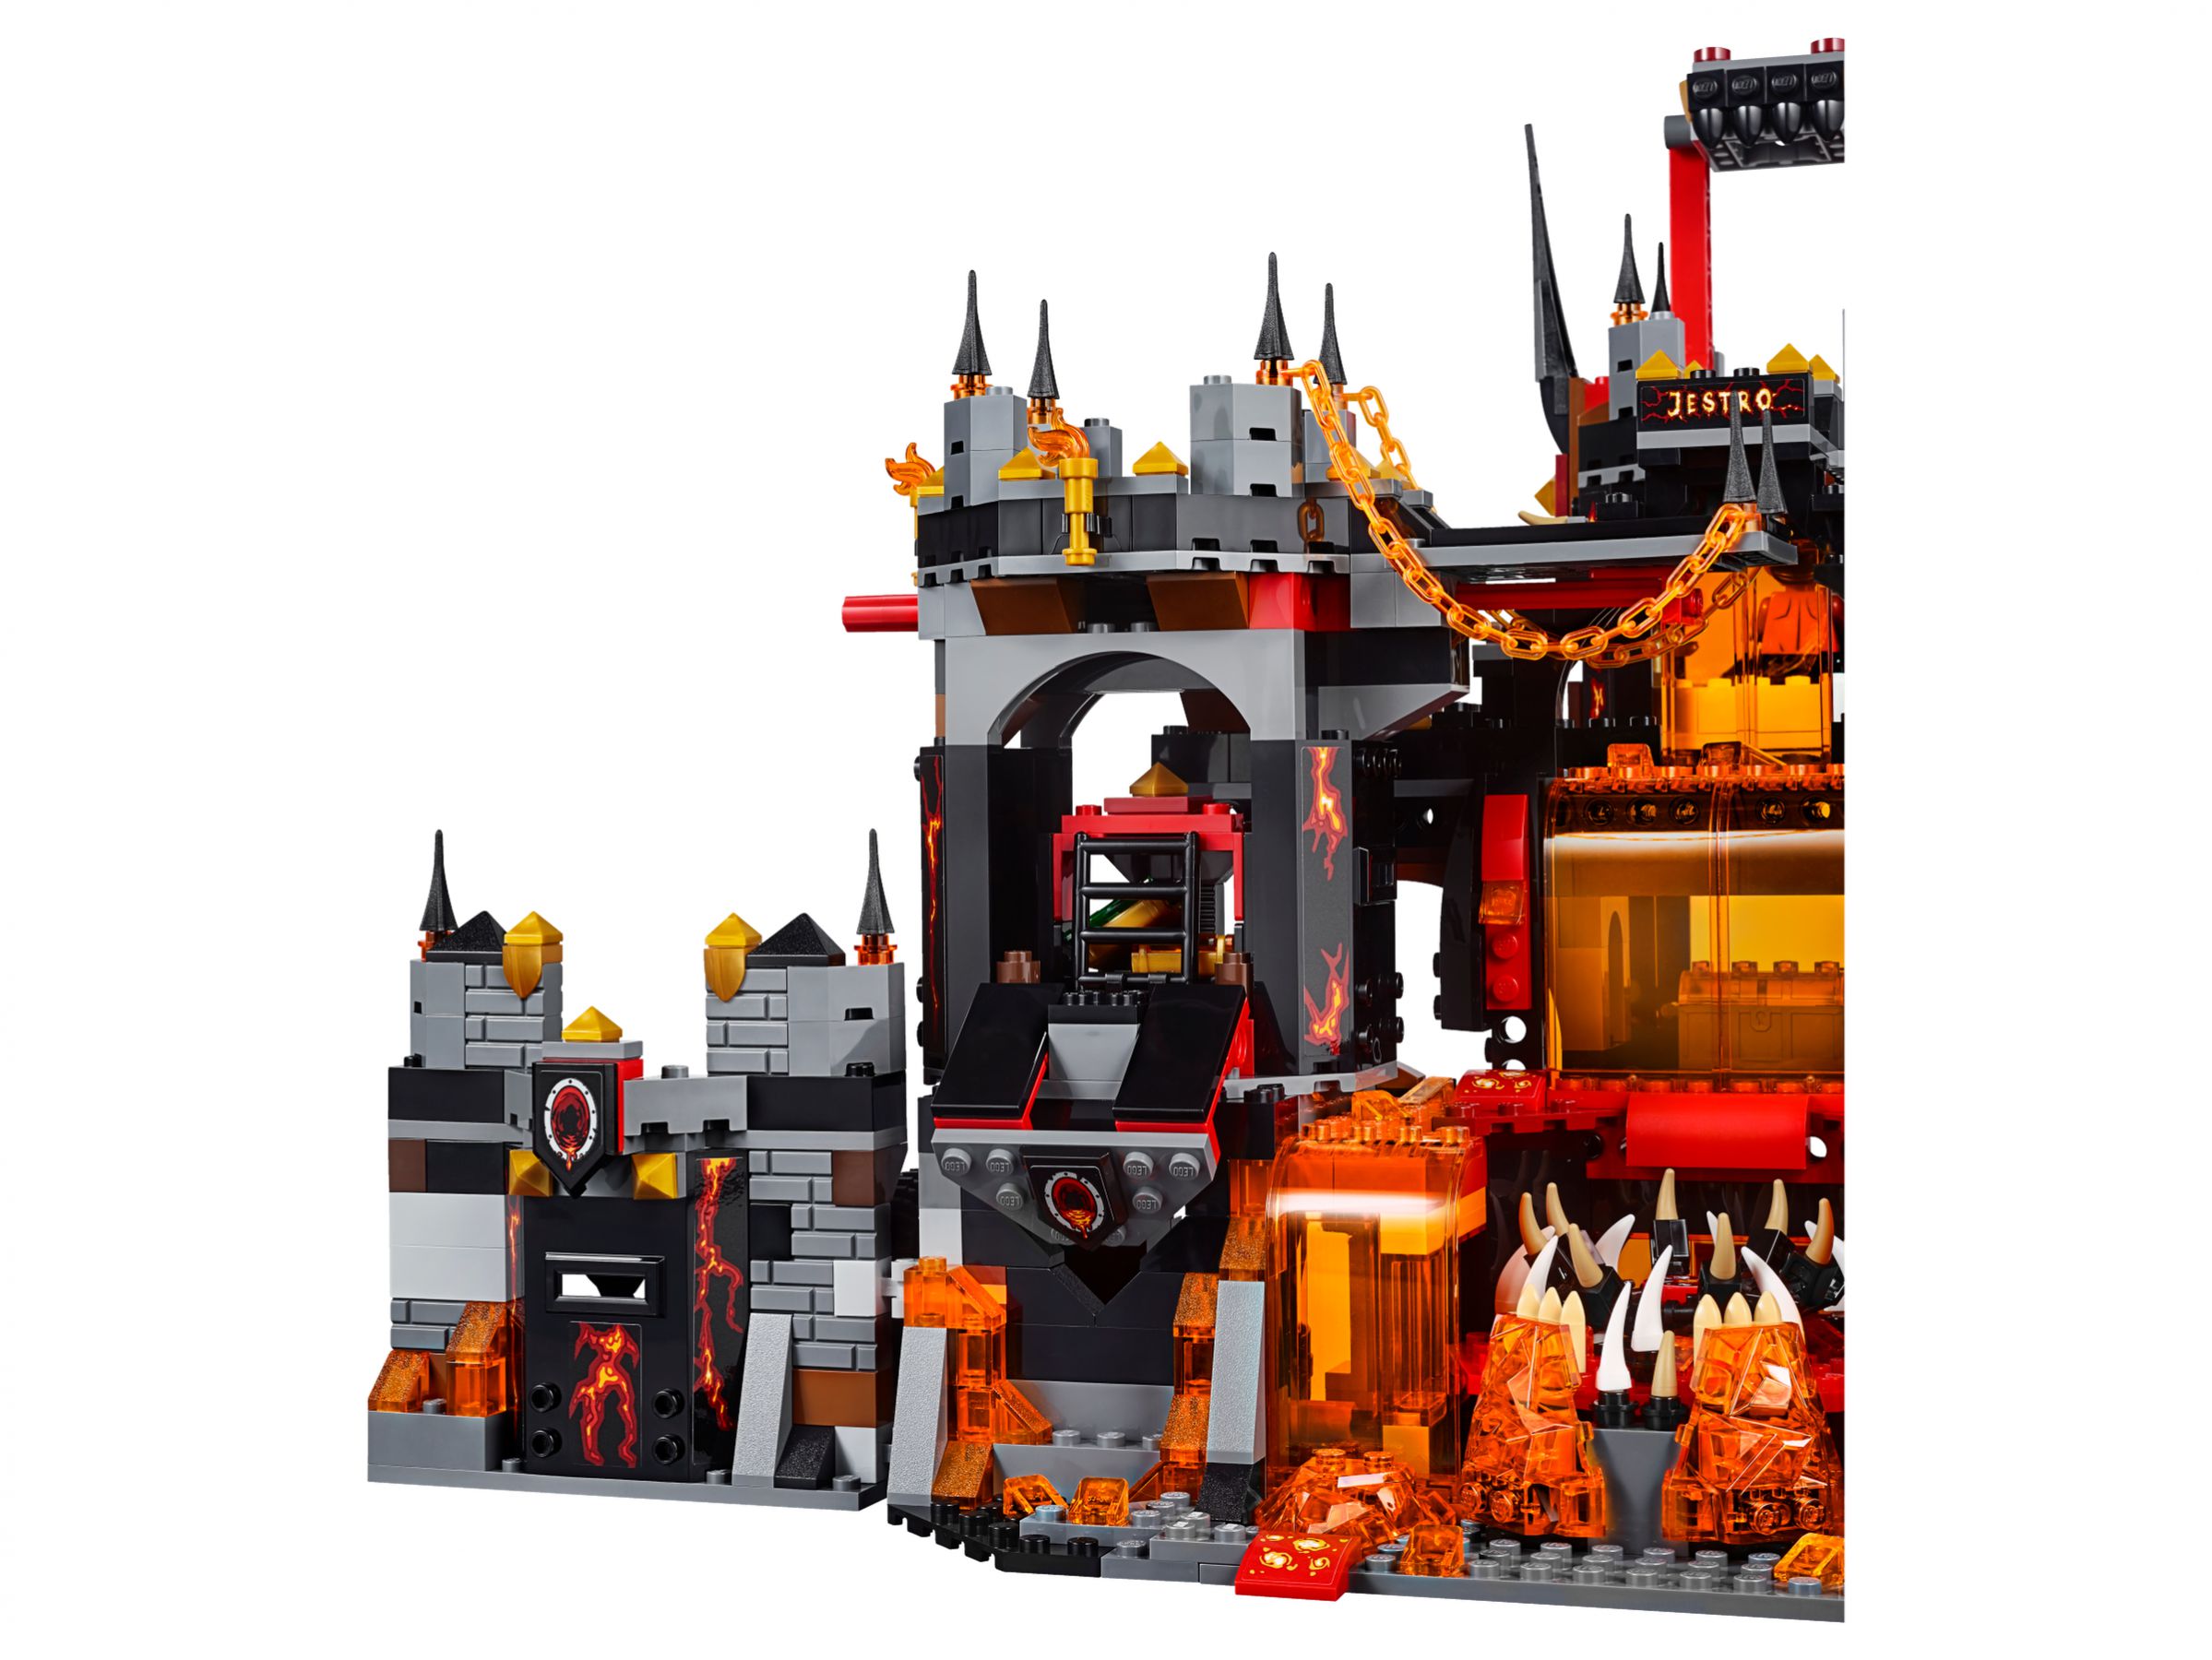 LEGO Nexo Knights 70323 Jestros Vulkanfestung LEGO_70323_alt5.jpg